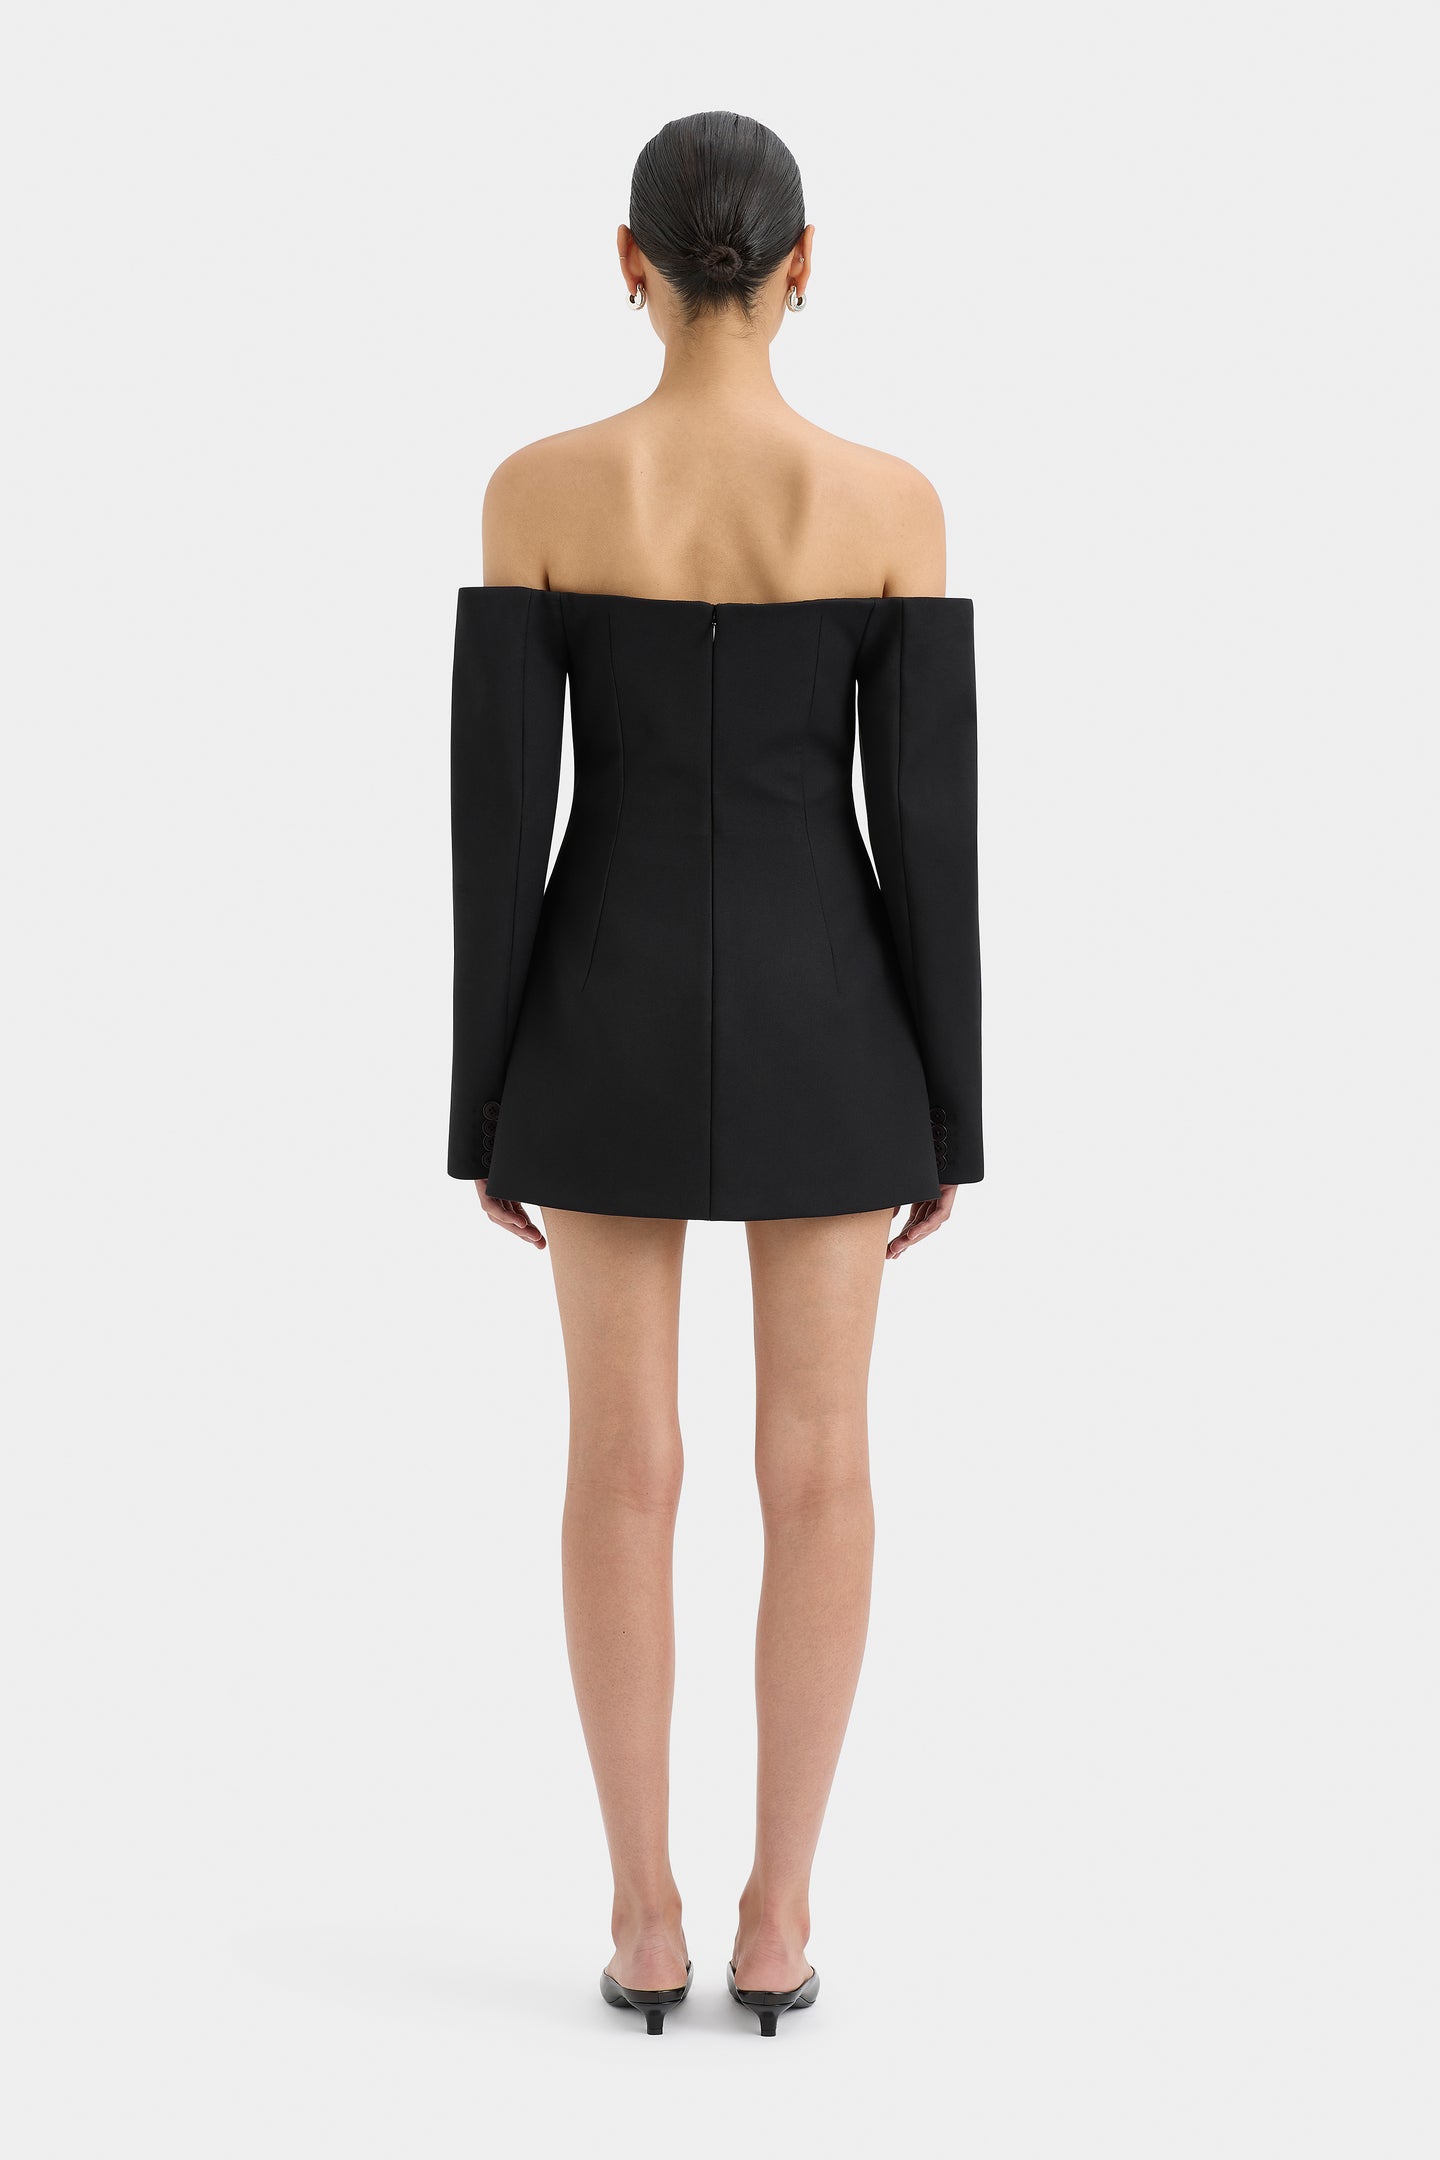 SIR the label Sandrine Tailored Mini Dress Black